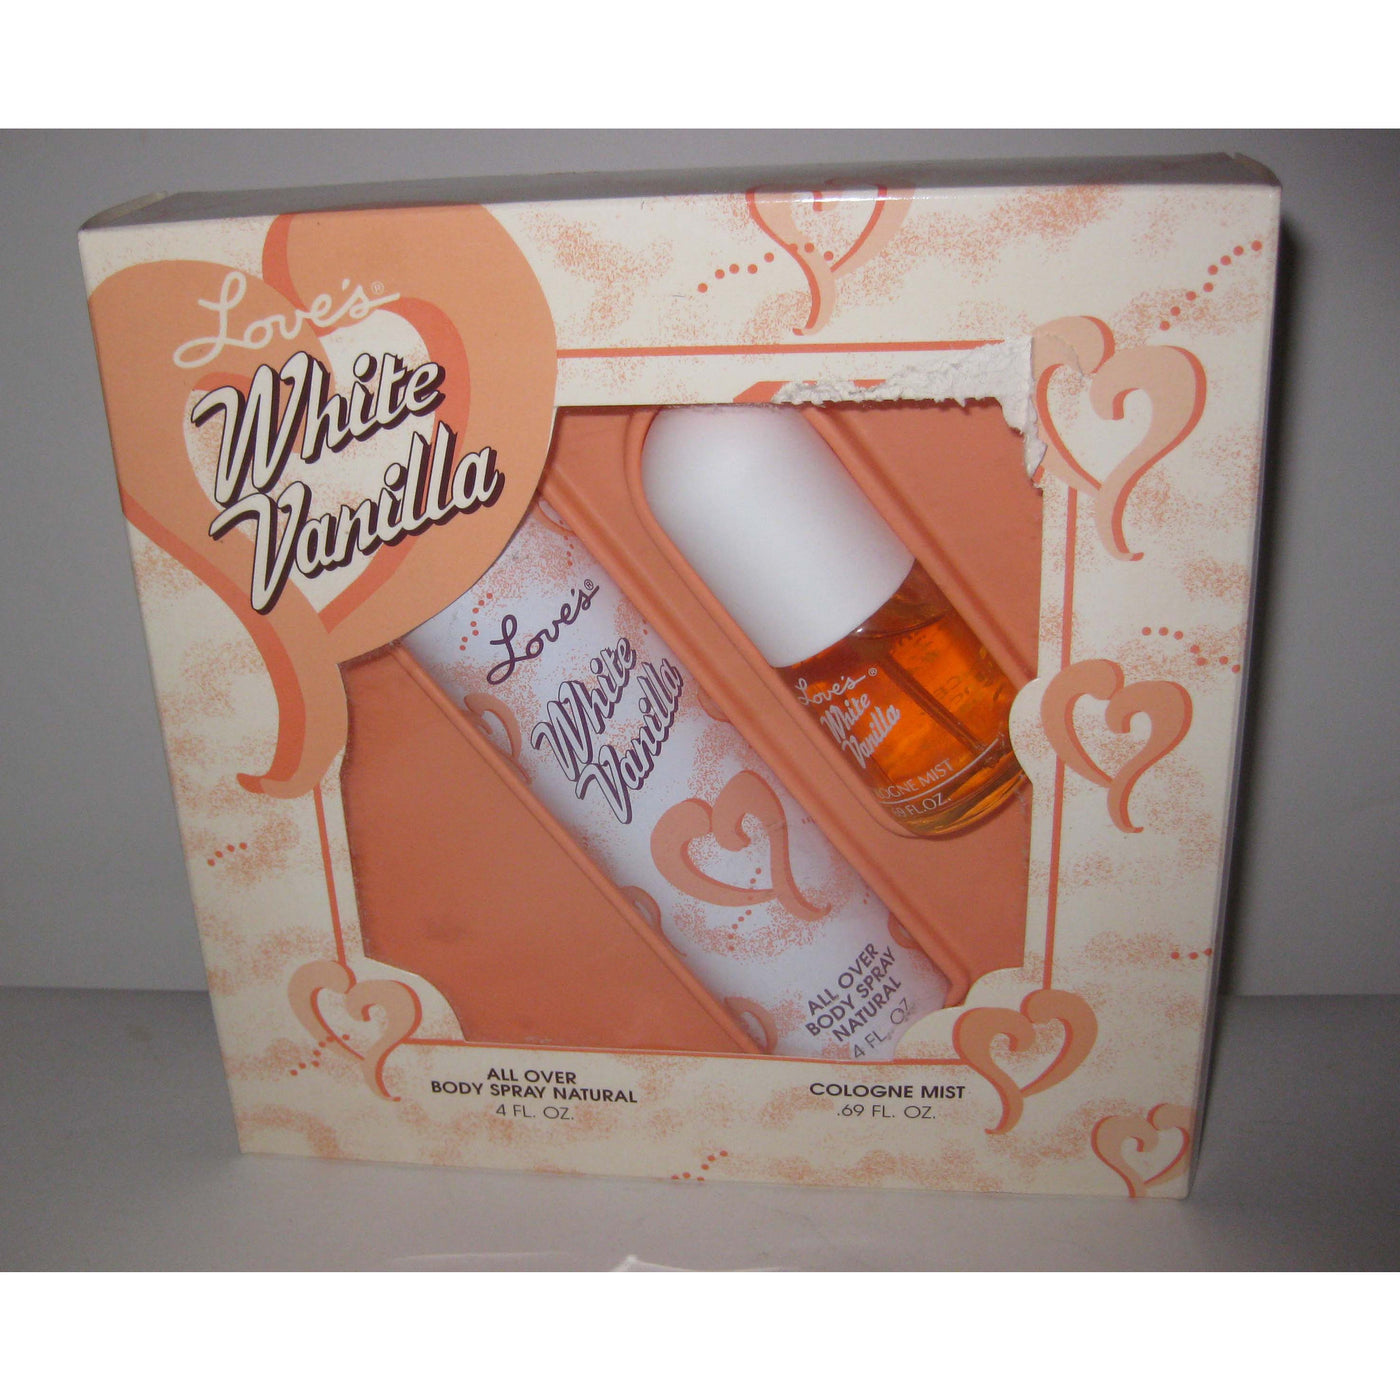 Vintage Love's White Vanilla Fragrance Set By MEM